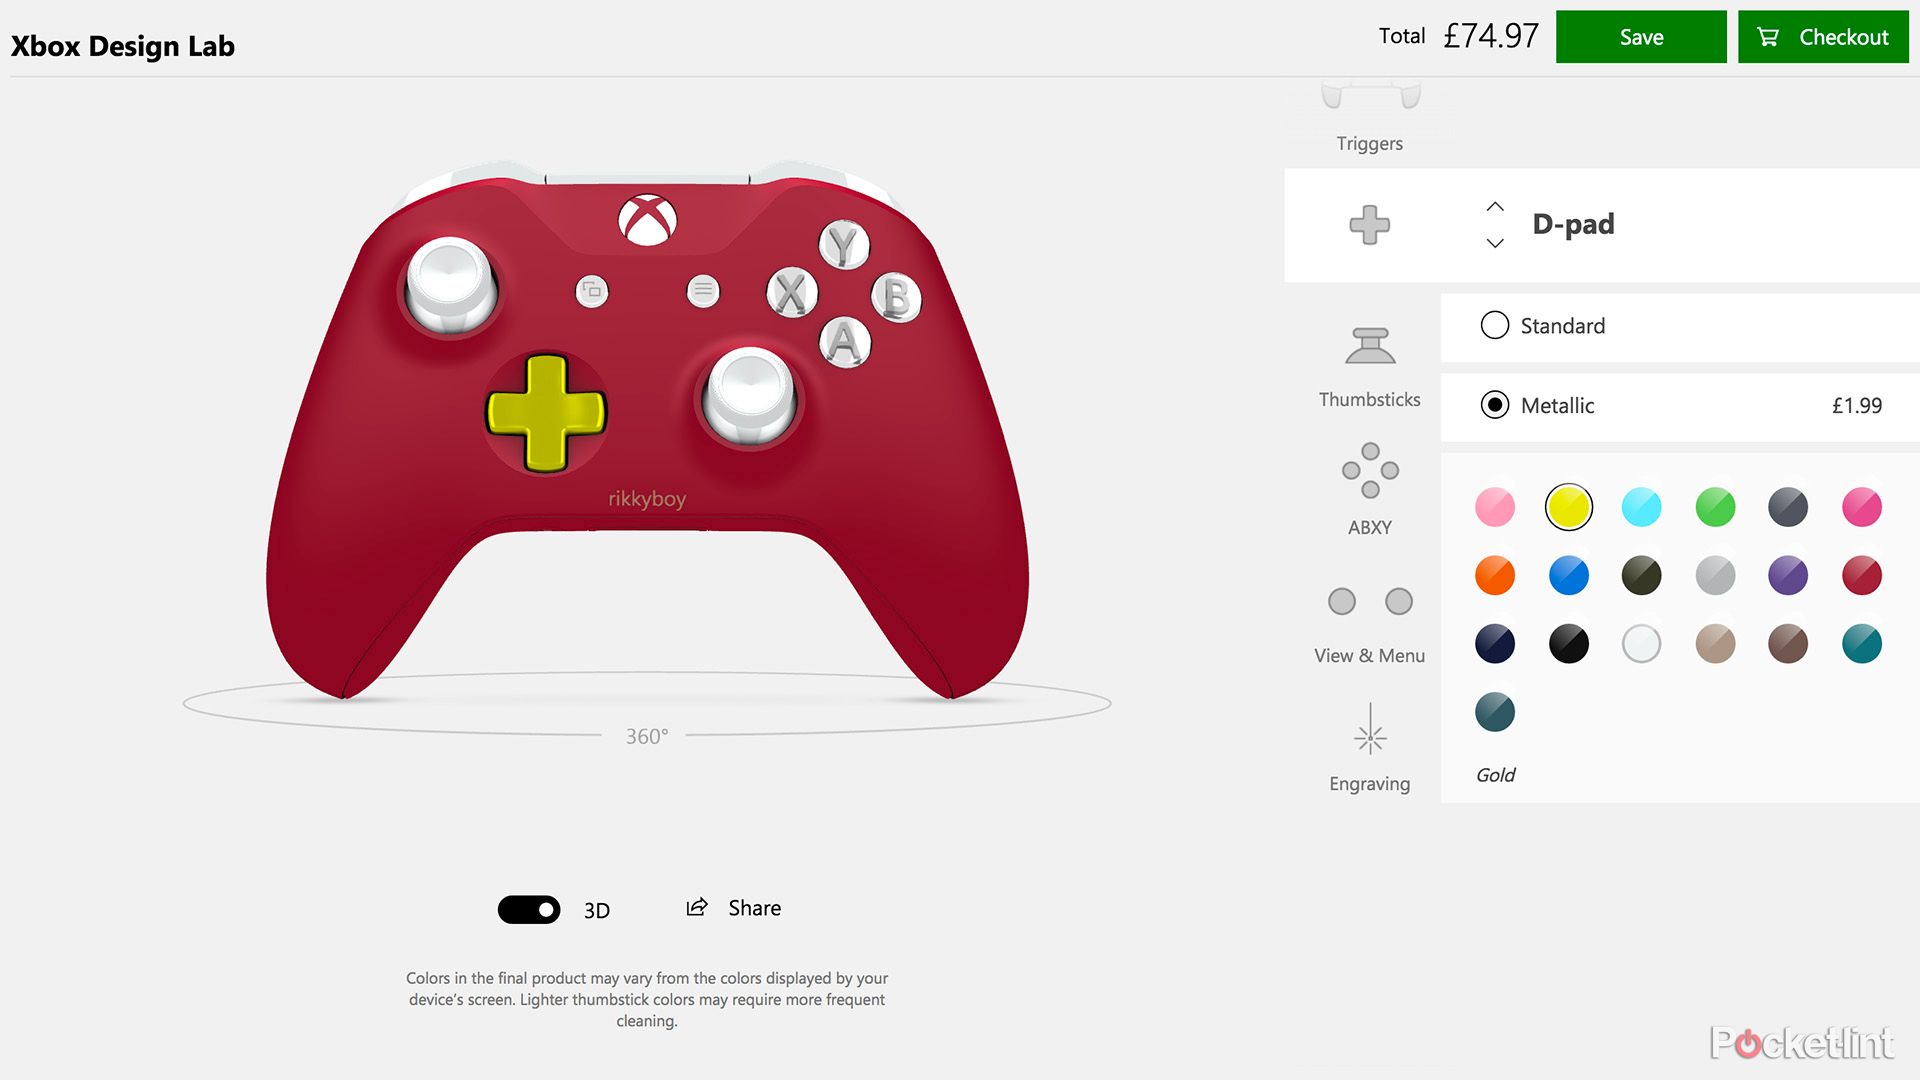 Xbox One Design Lab screens image 5